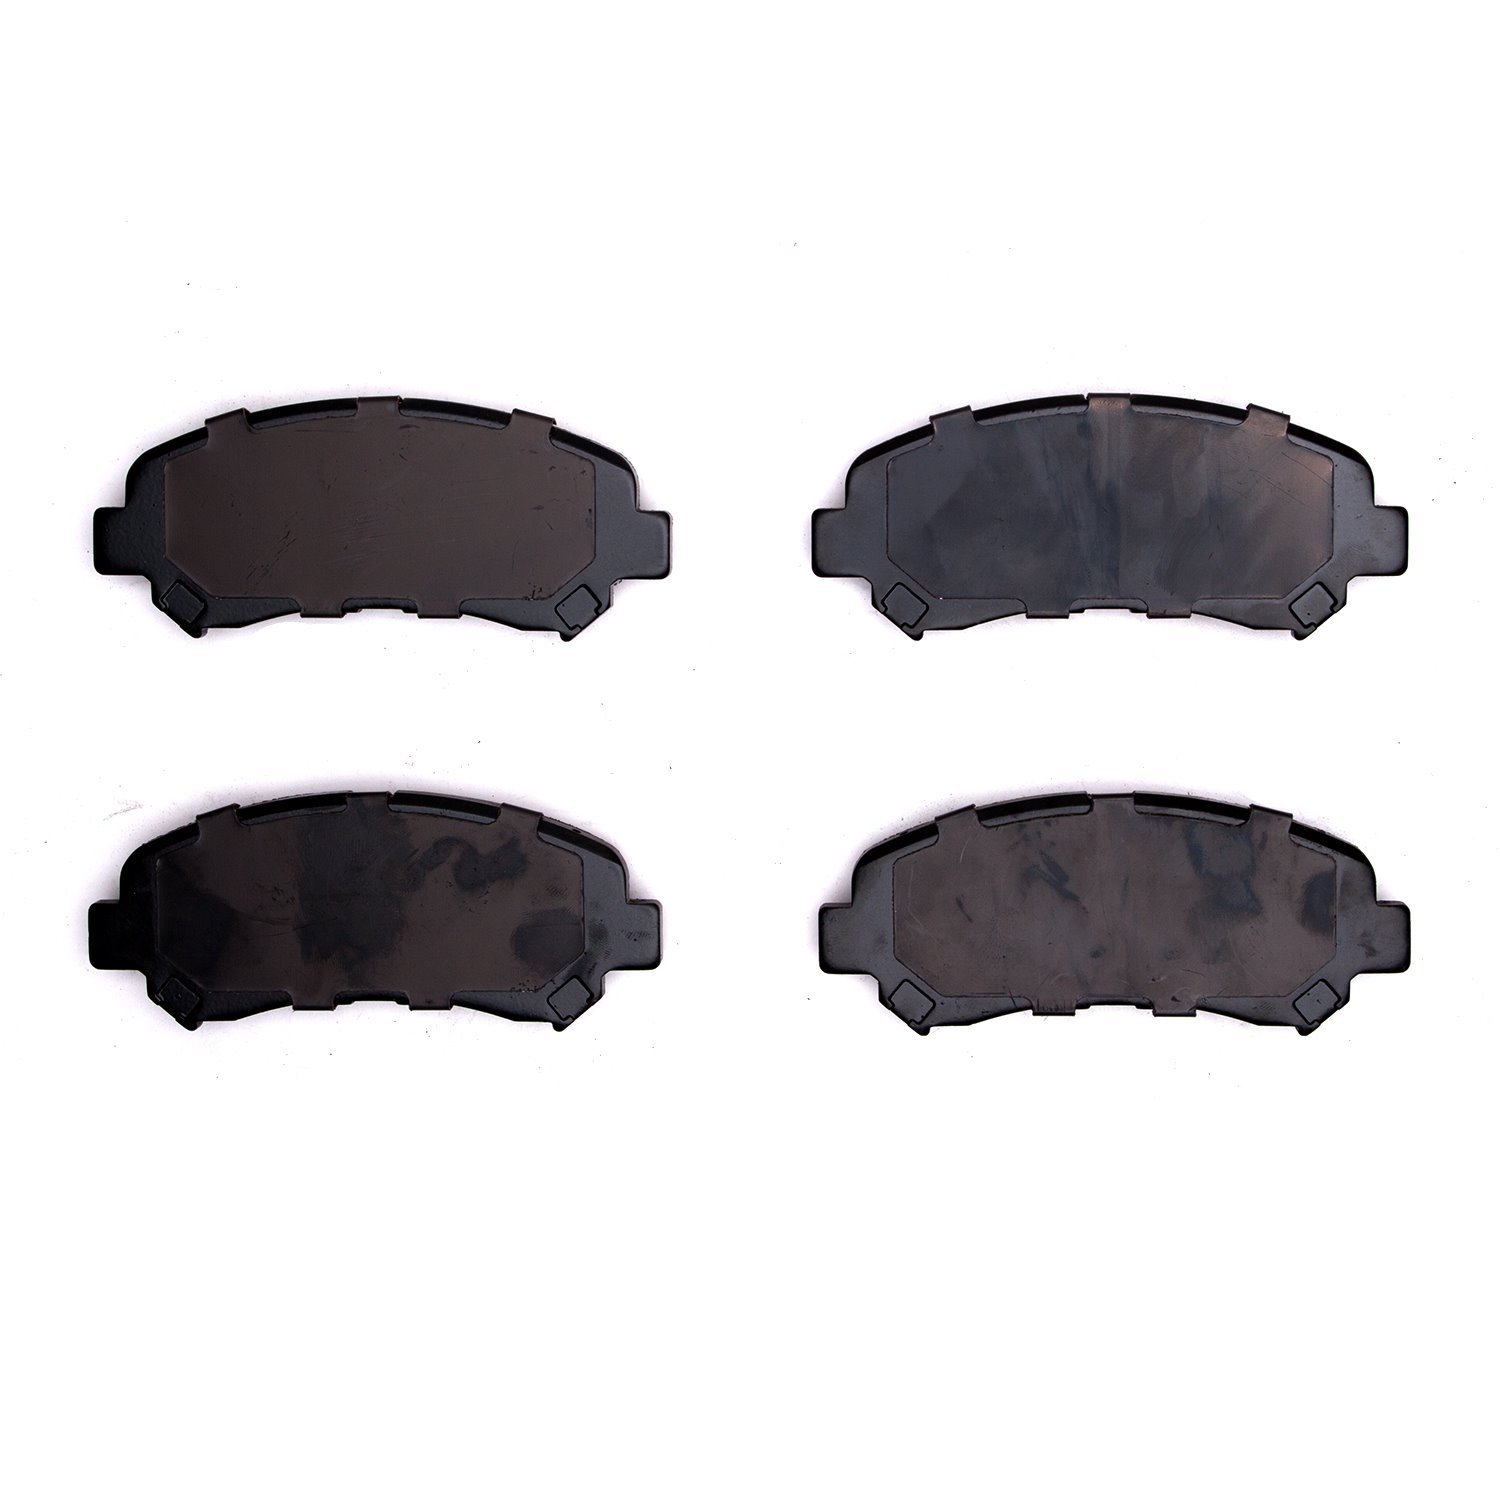 1551-1374-00 5000 Advanced Ceramic Brake Pads, Fits Select Multiple Makes/Models, Position: Front